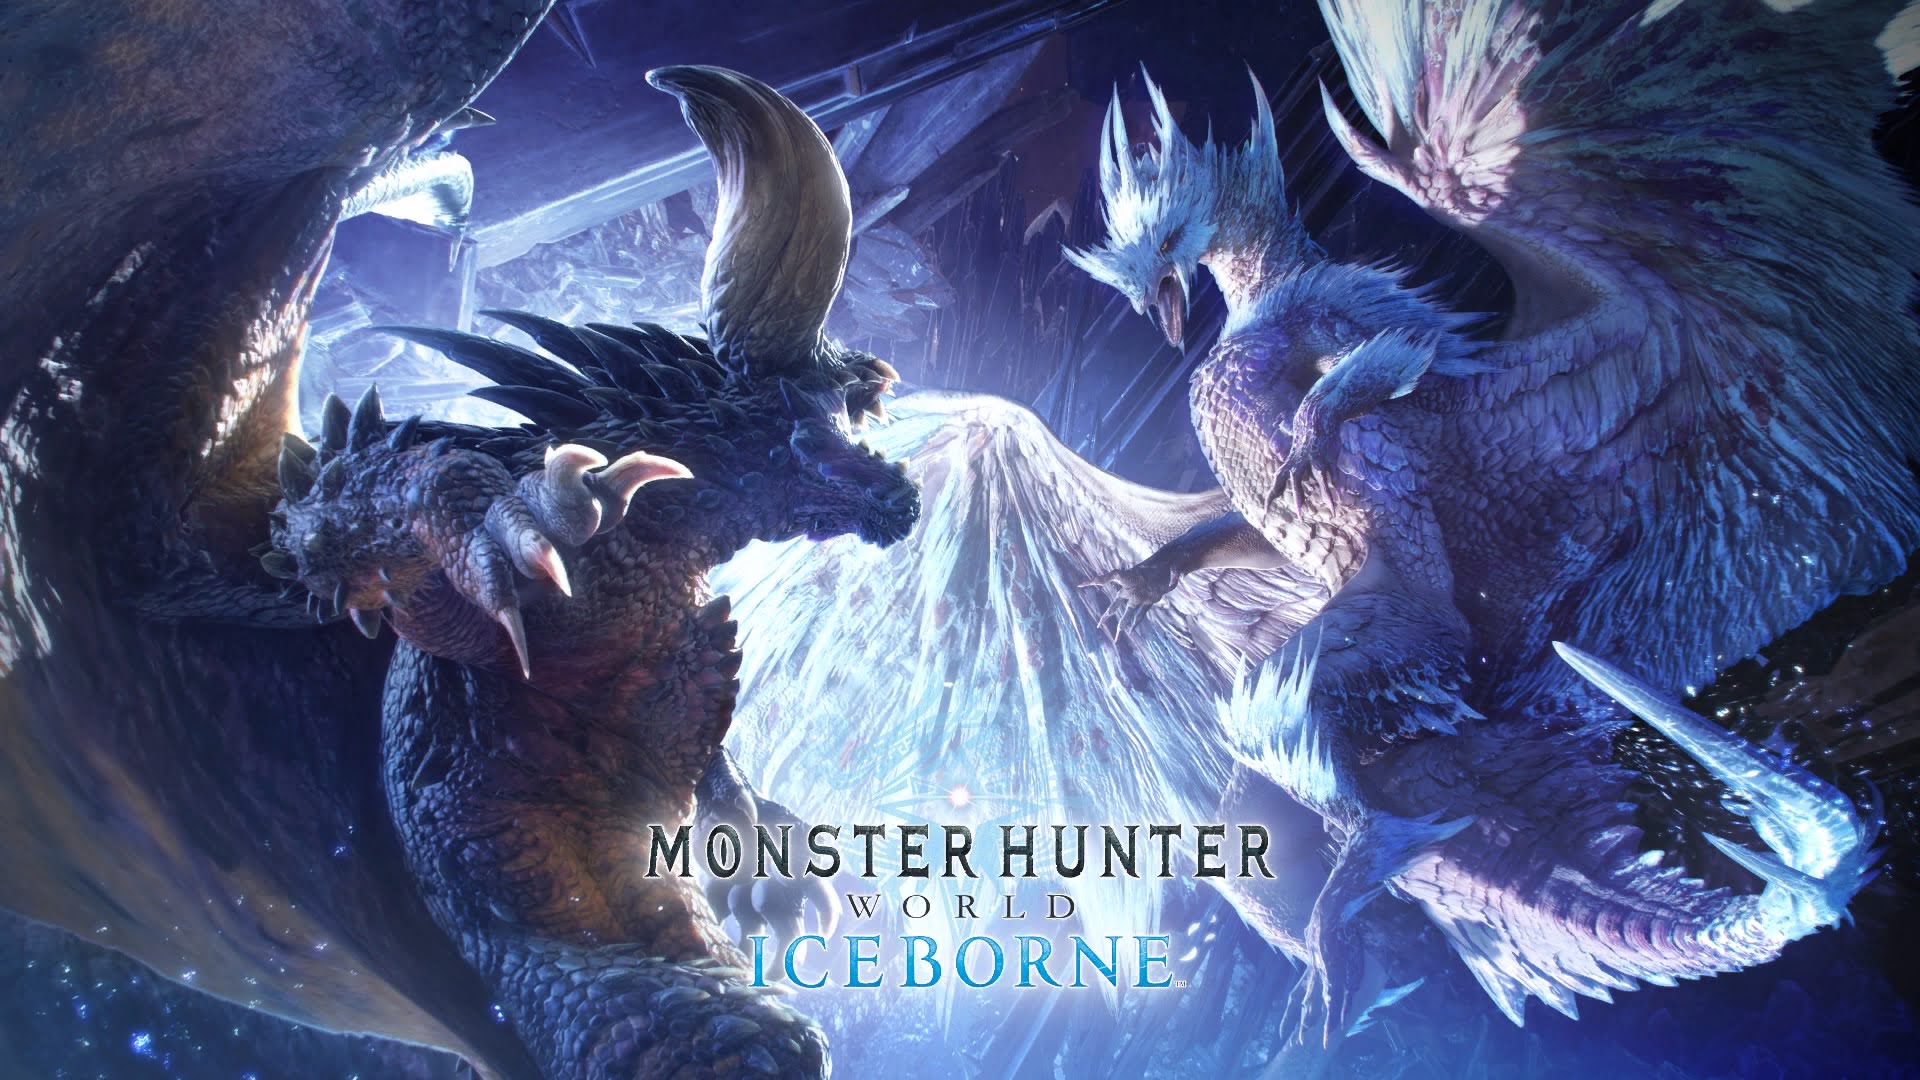 monster hunter ps5 download free